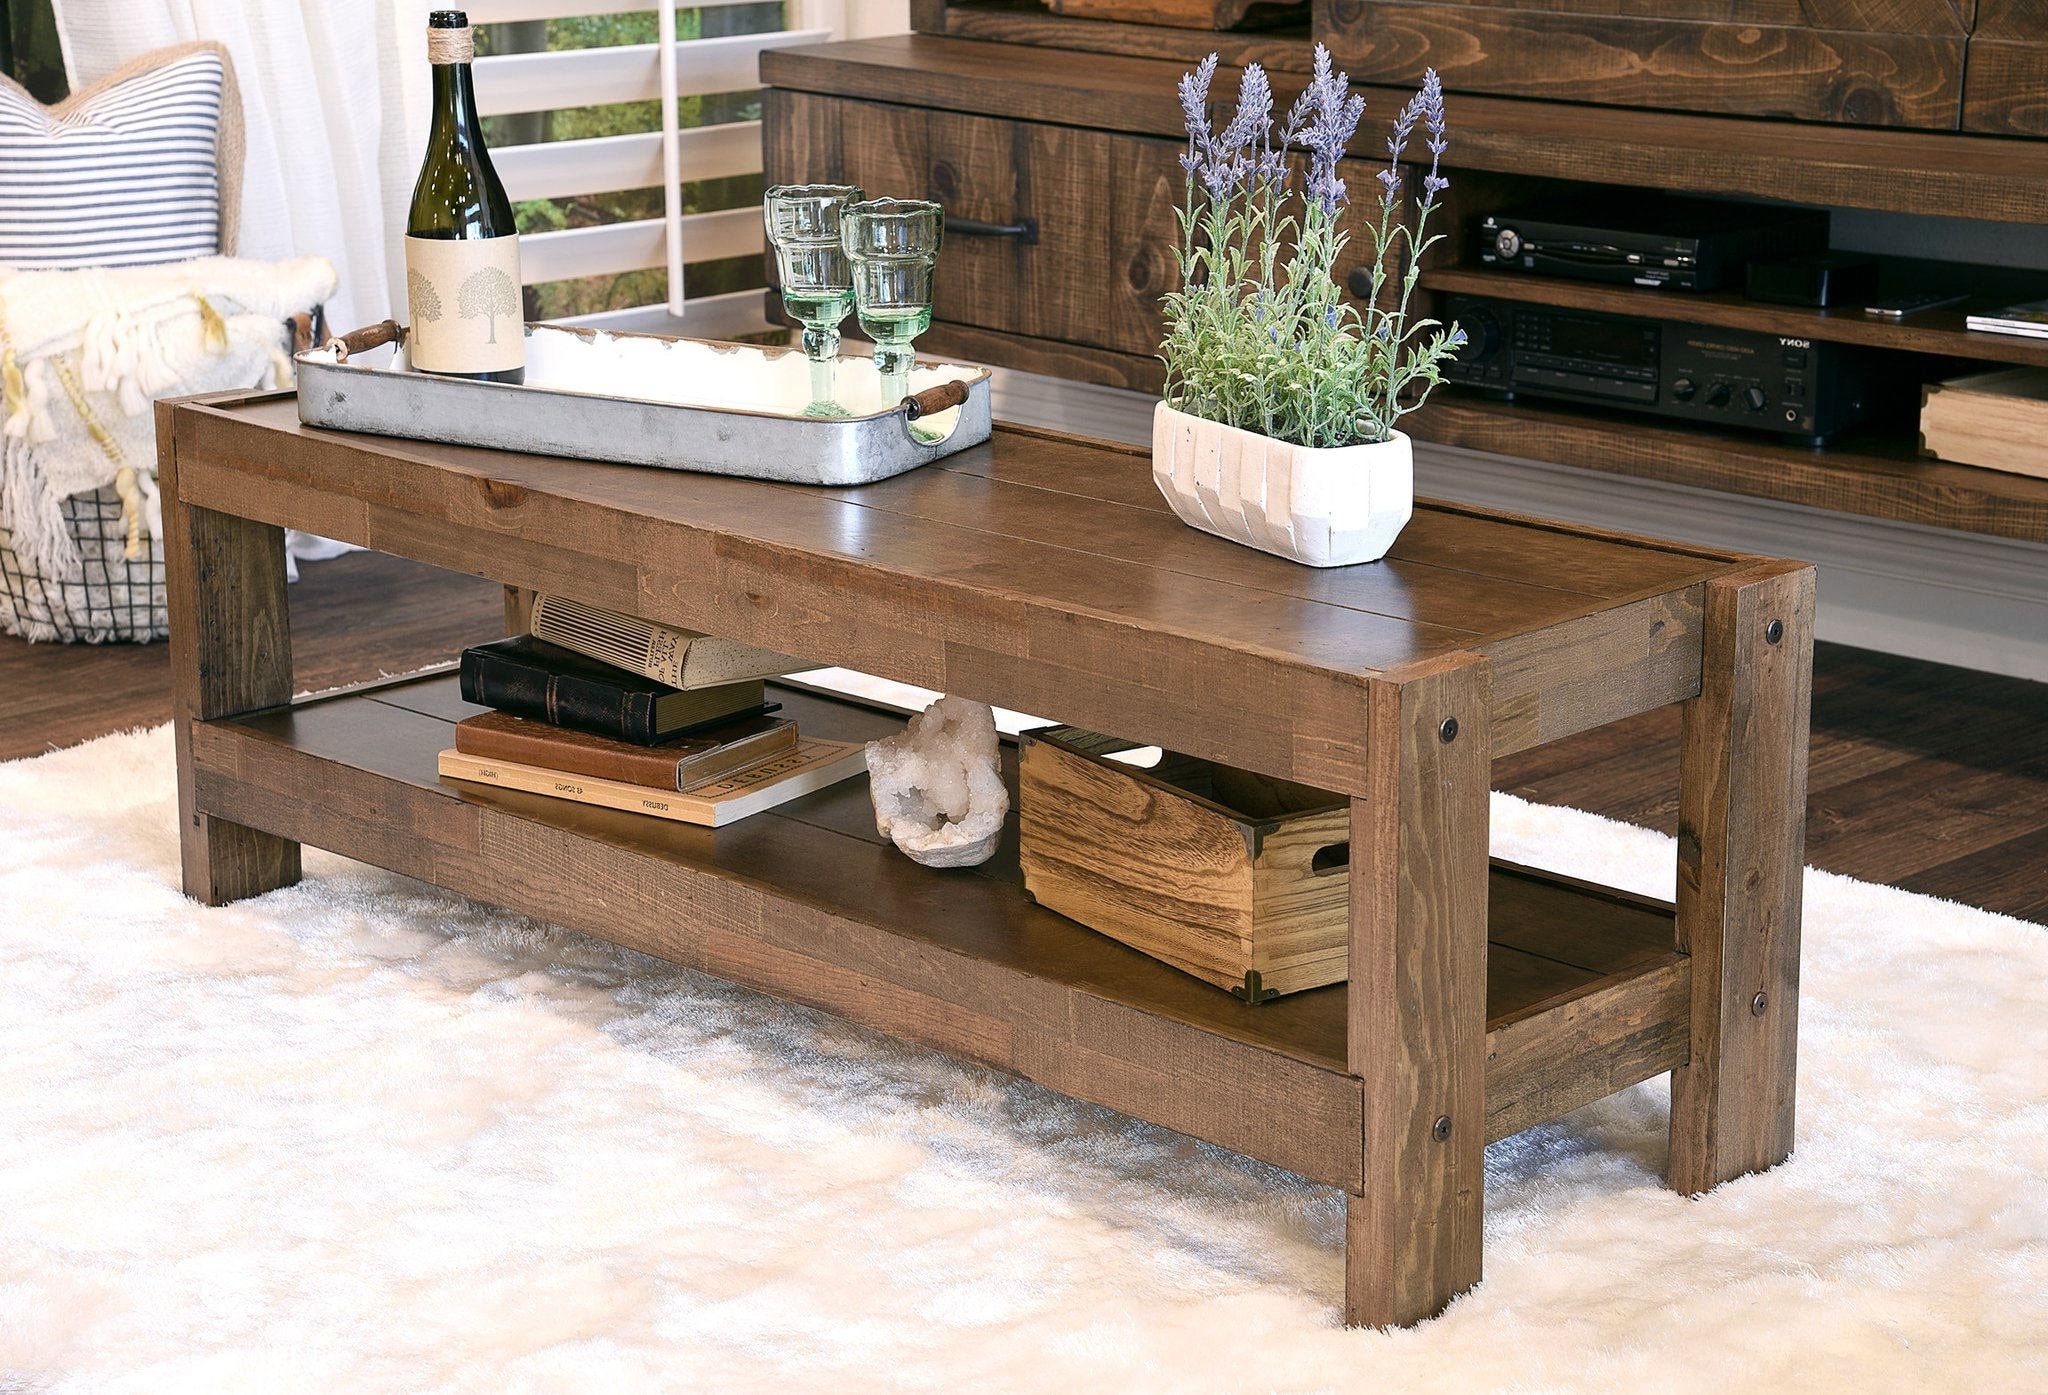 Reclaimed Wood Coffee Table Rustic Barn Wood Style | Etsy For Rustic Wood Coffee Tables (View 4 of 20)